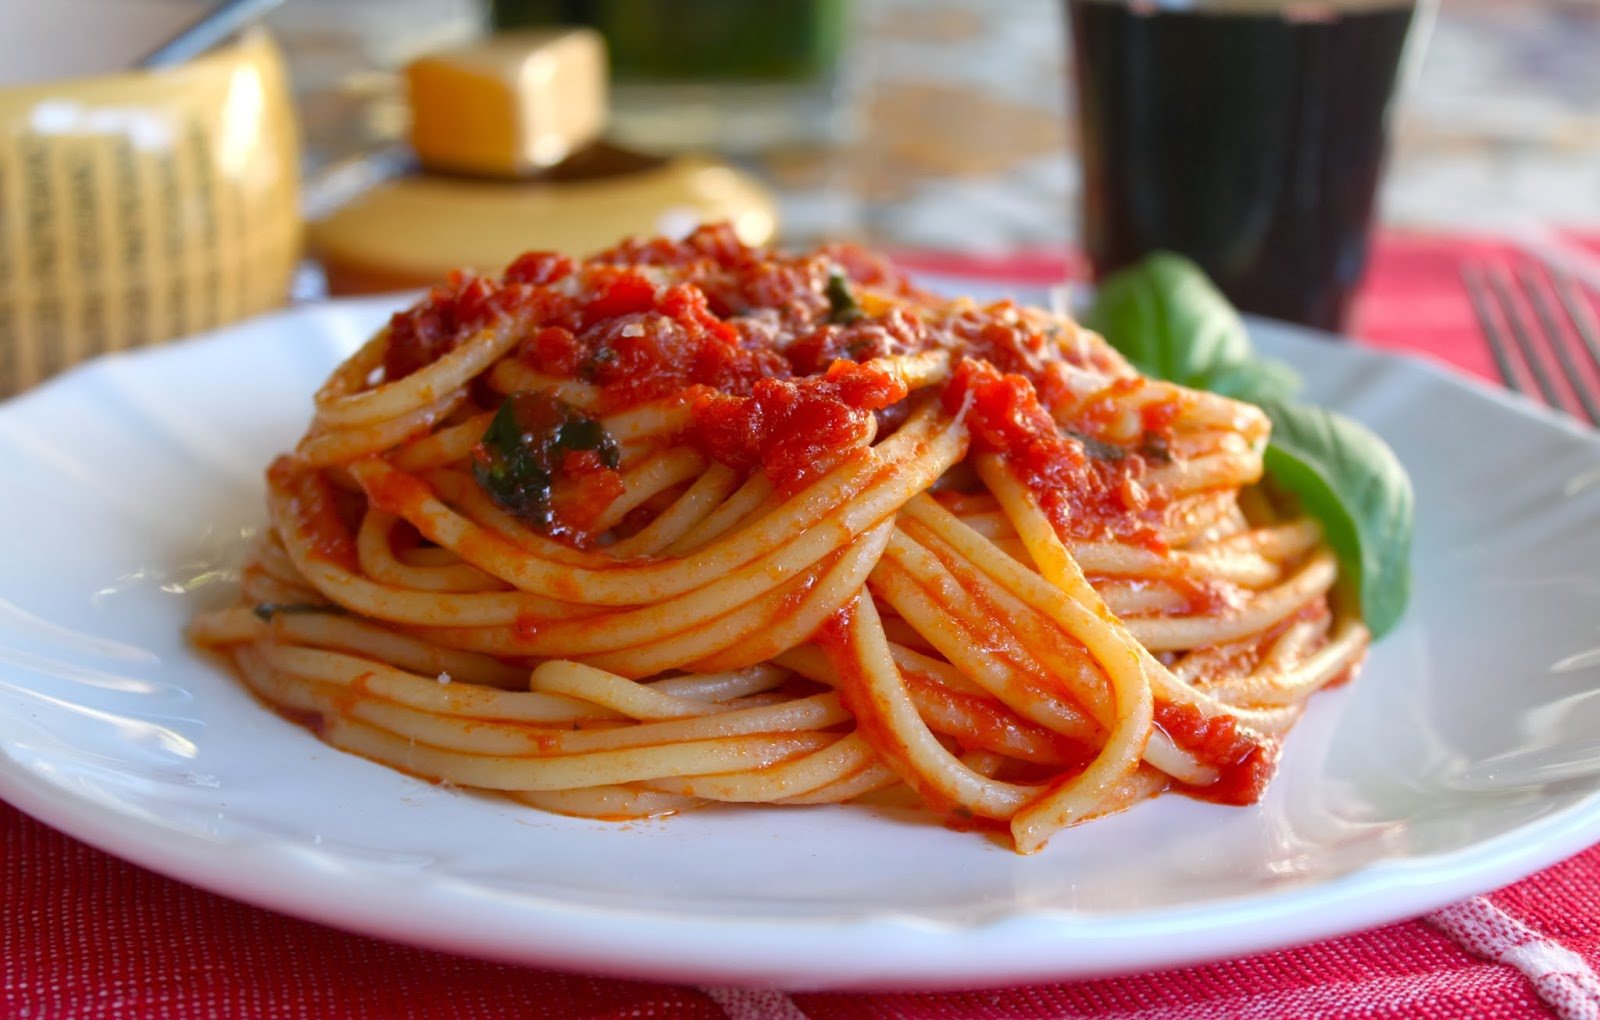 Спагетти болоньезе томатная паста. Букатини аматричана. Спагетти неаполитано. Паста неаполитано. Спагетти в томатном соусе.